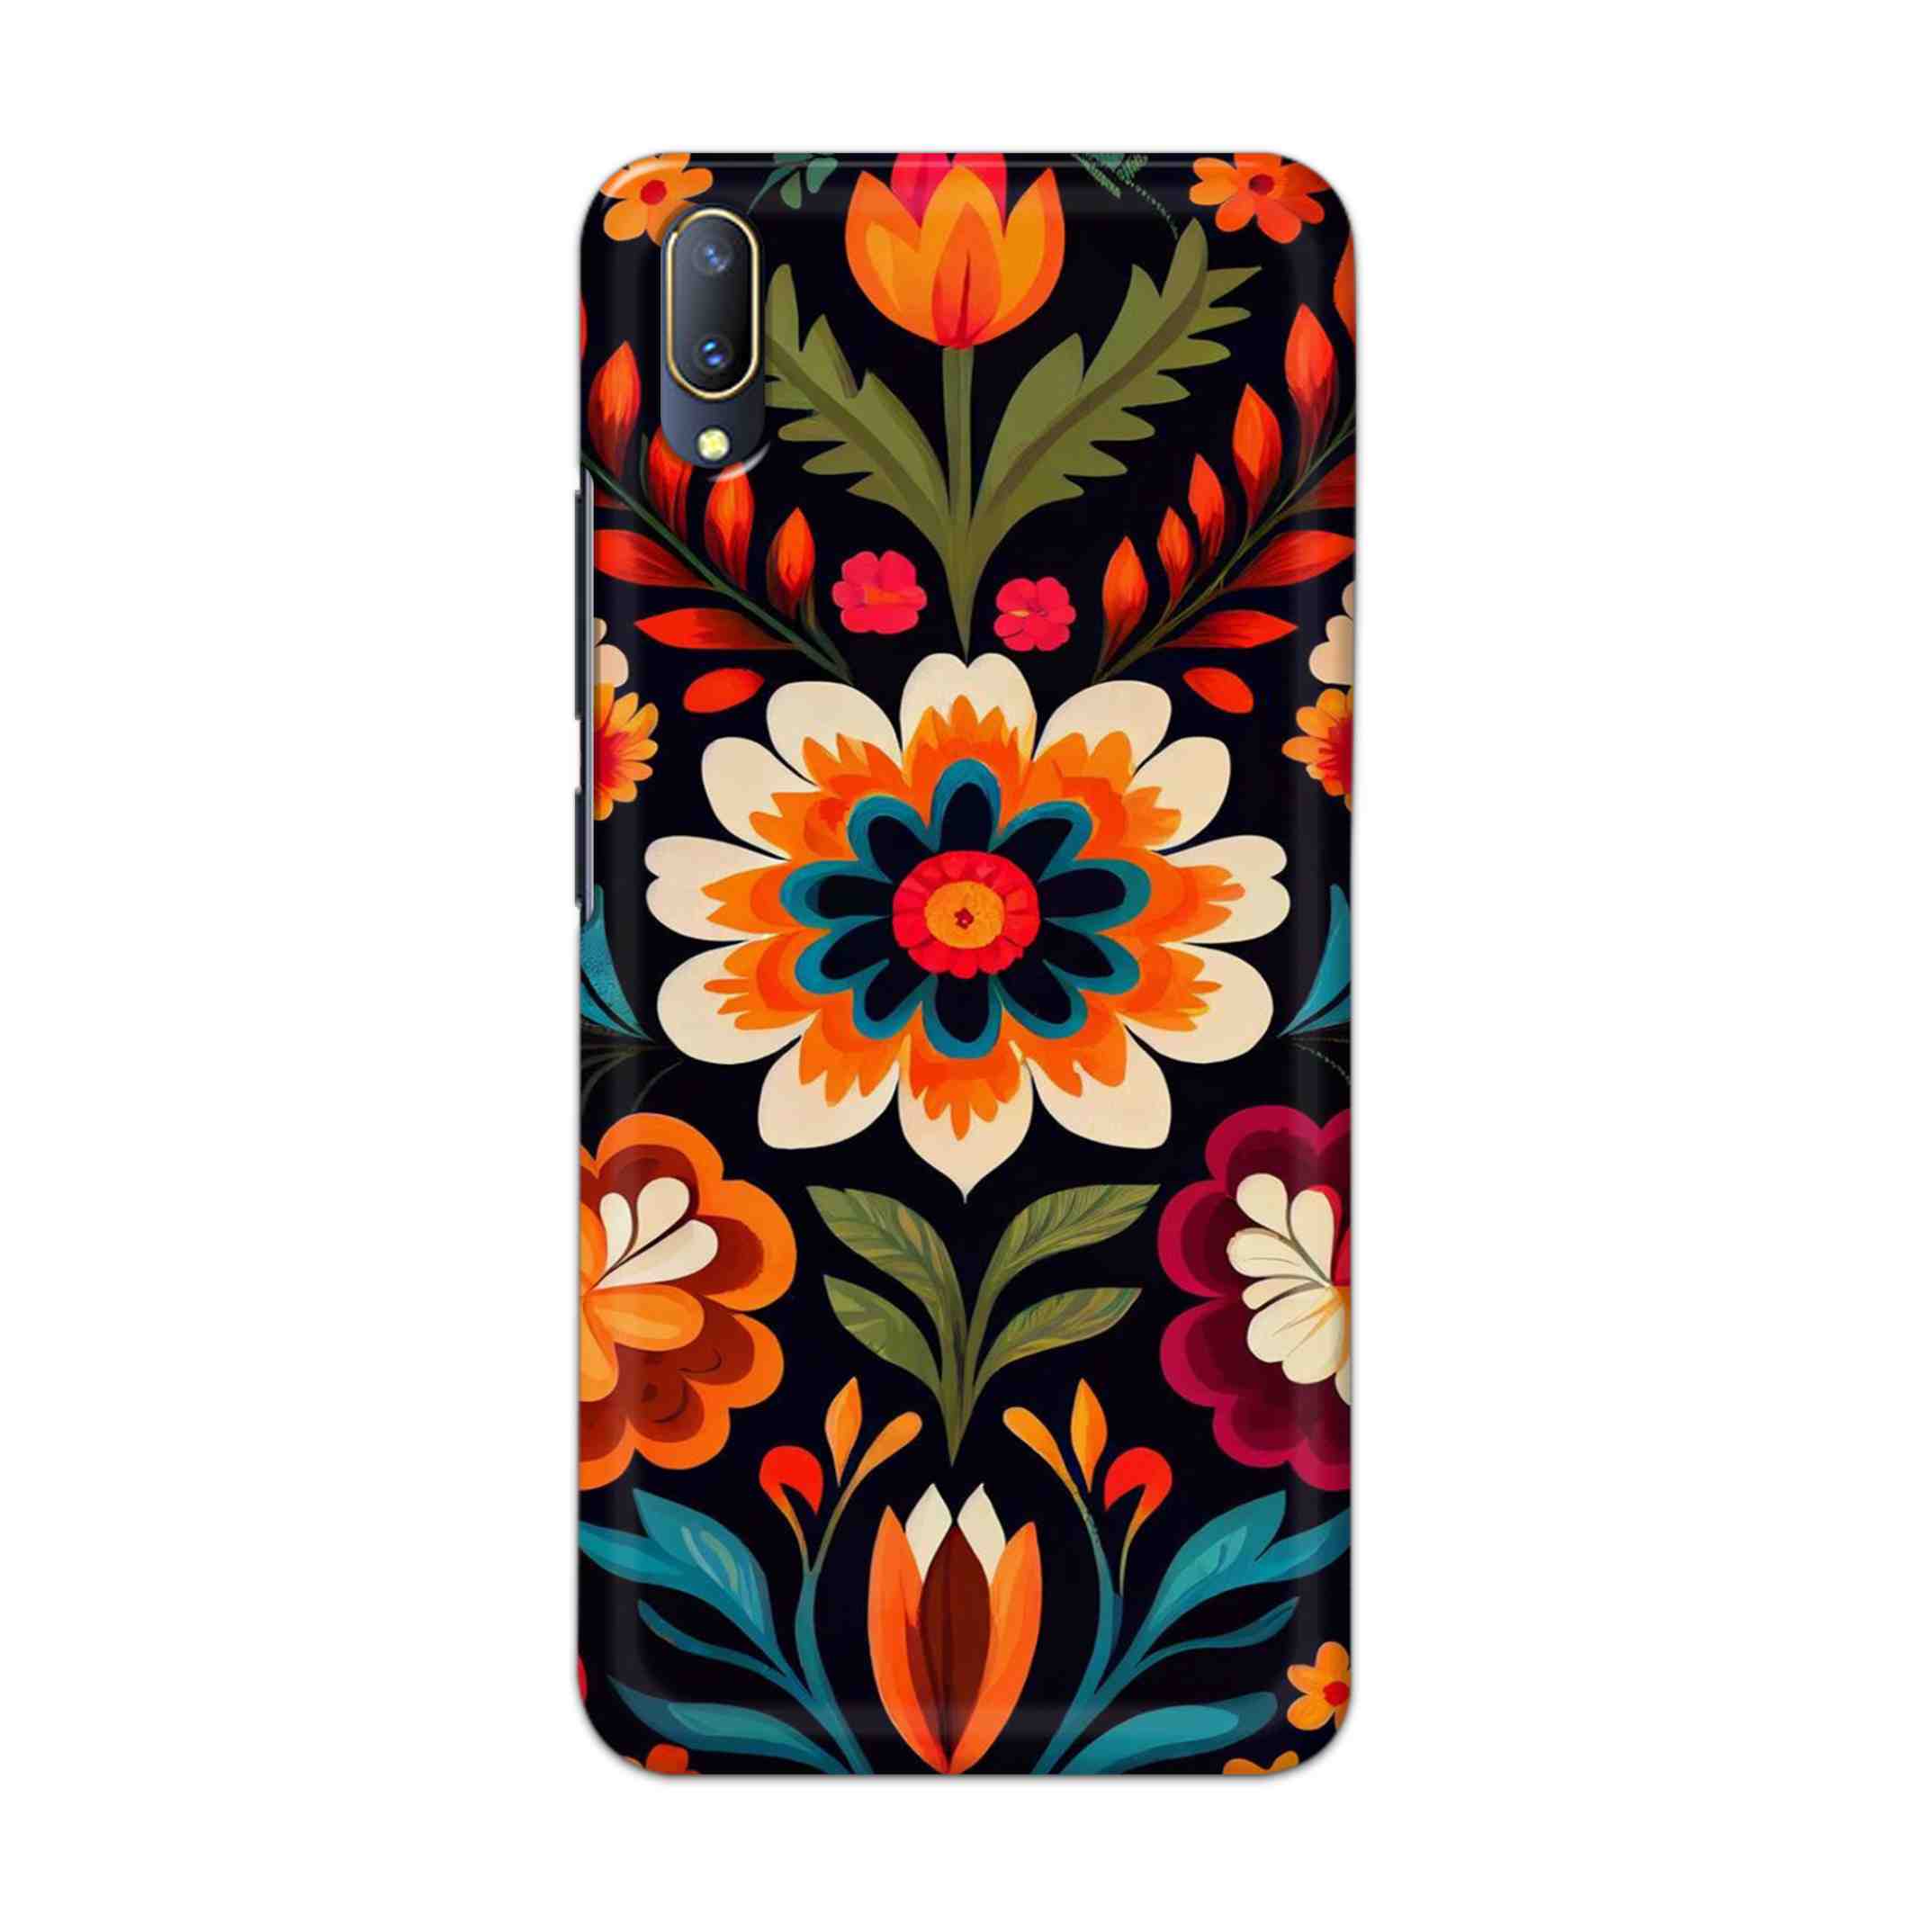 Buy Flower Hard Back Mobile Phone Case Cover For V11 PRO Online